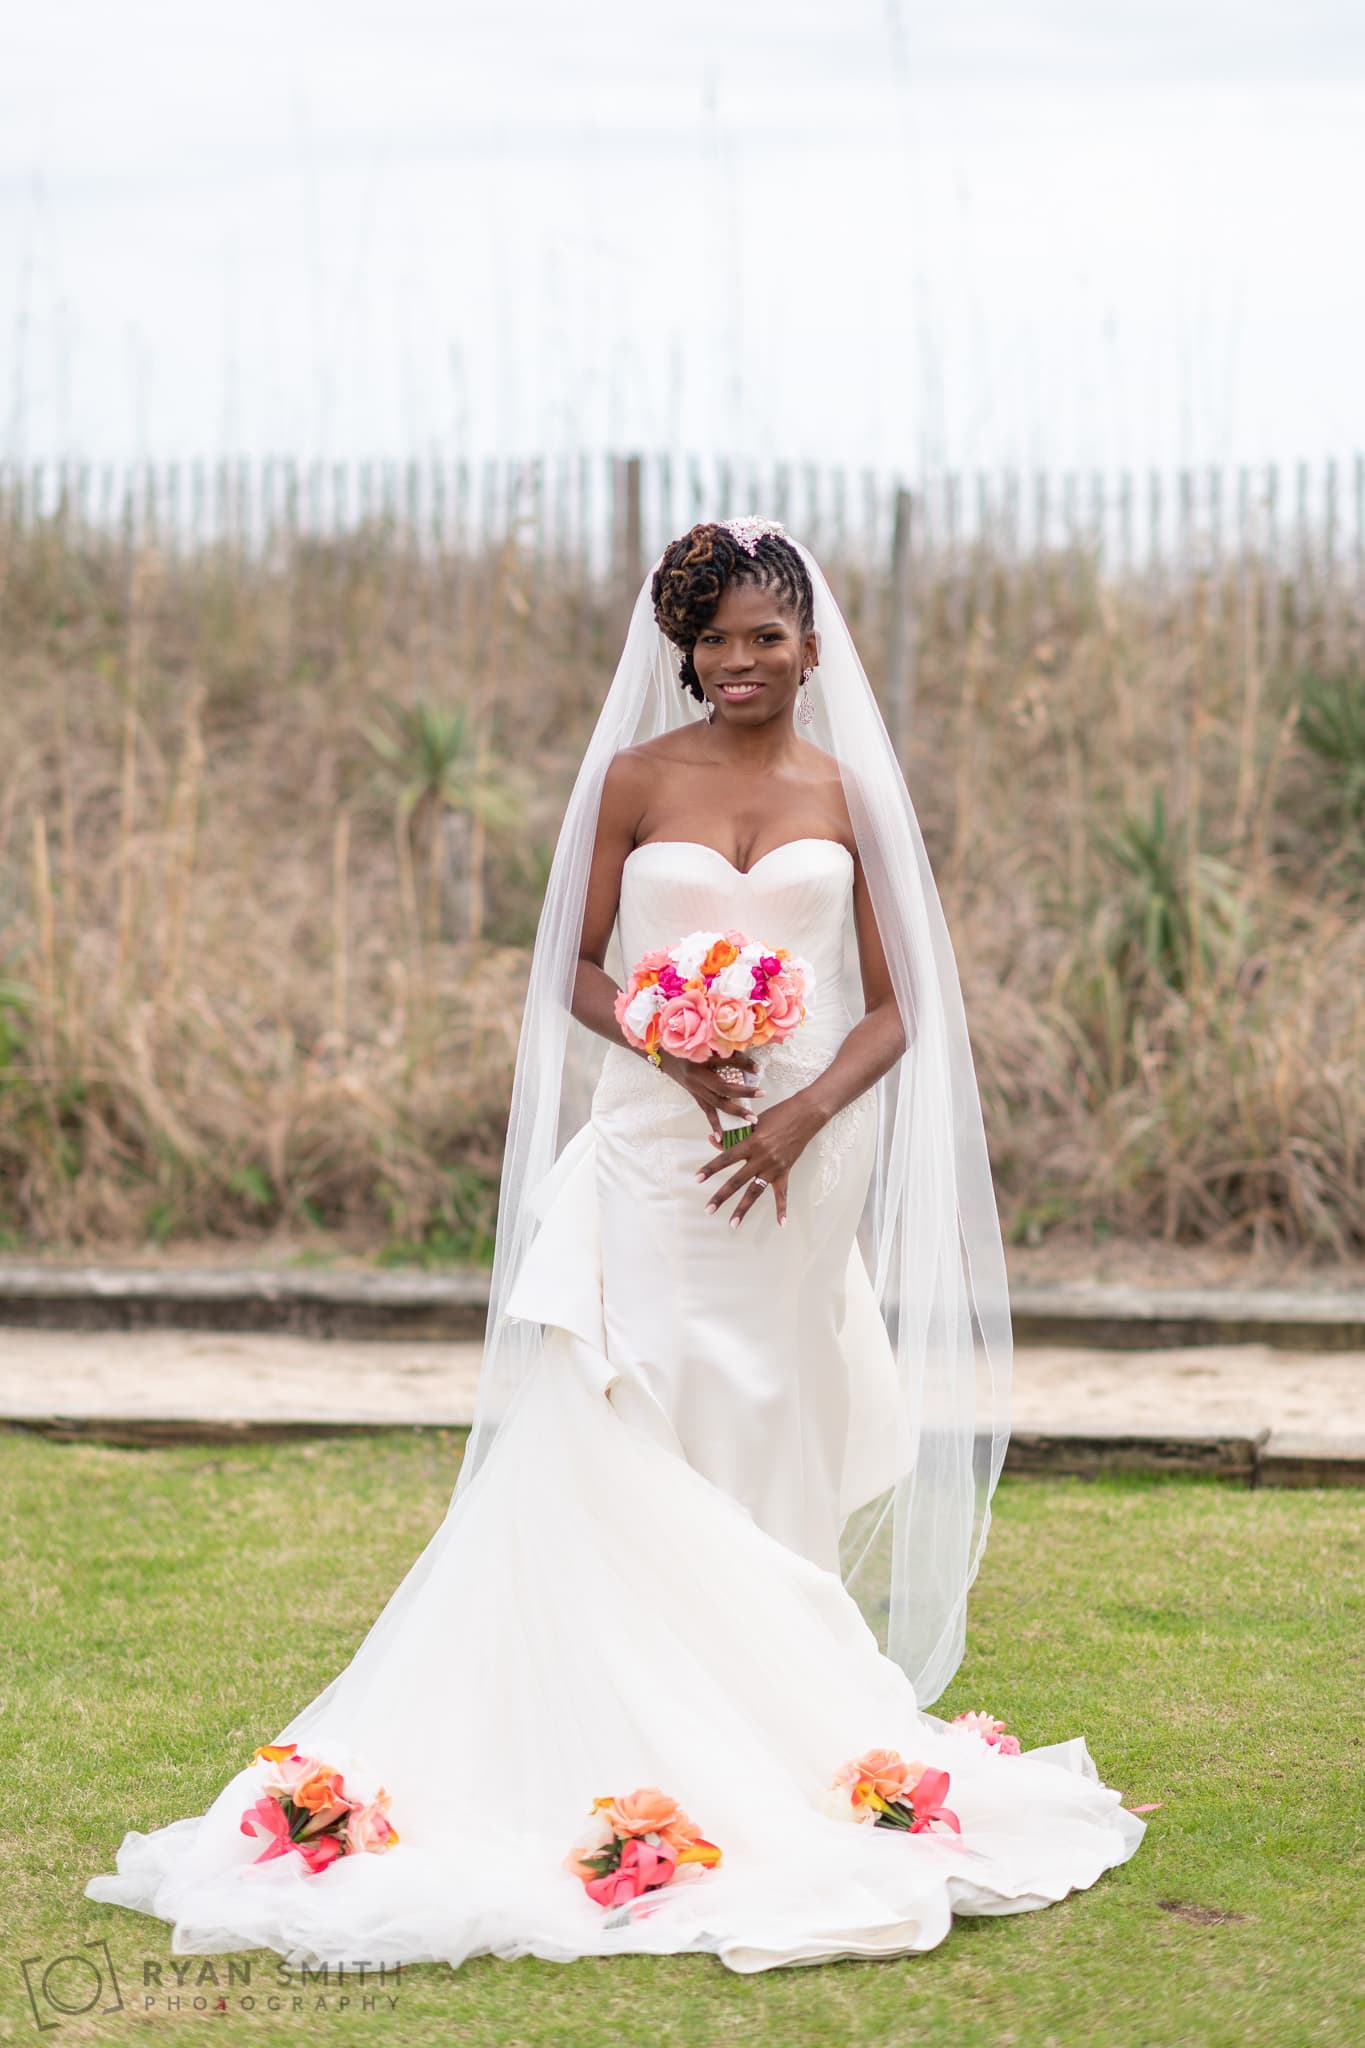 Bride posing with flowers on her dress - Doubletree Resort - Myrtle Beach